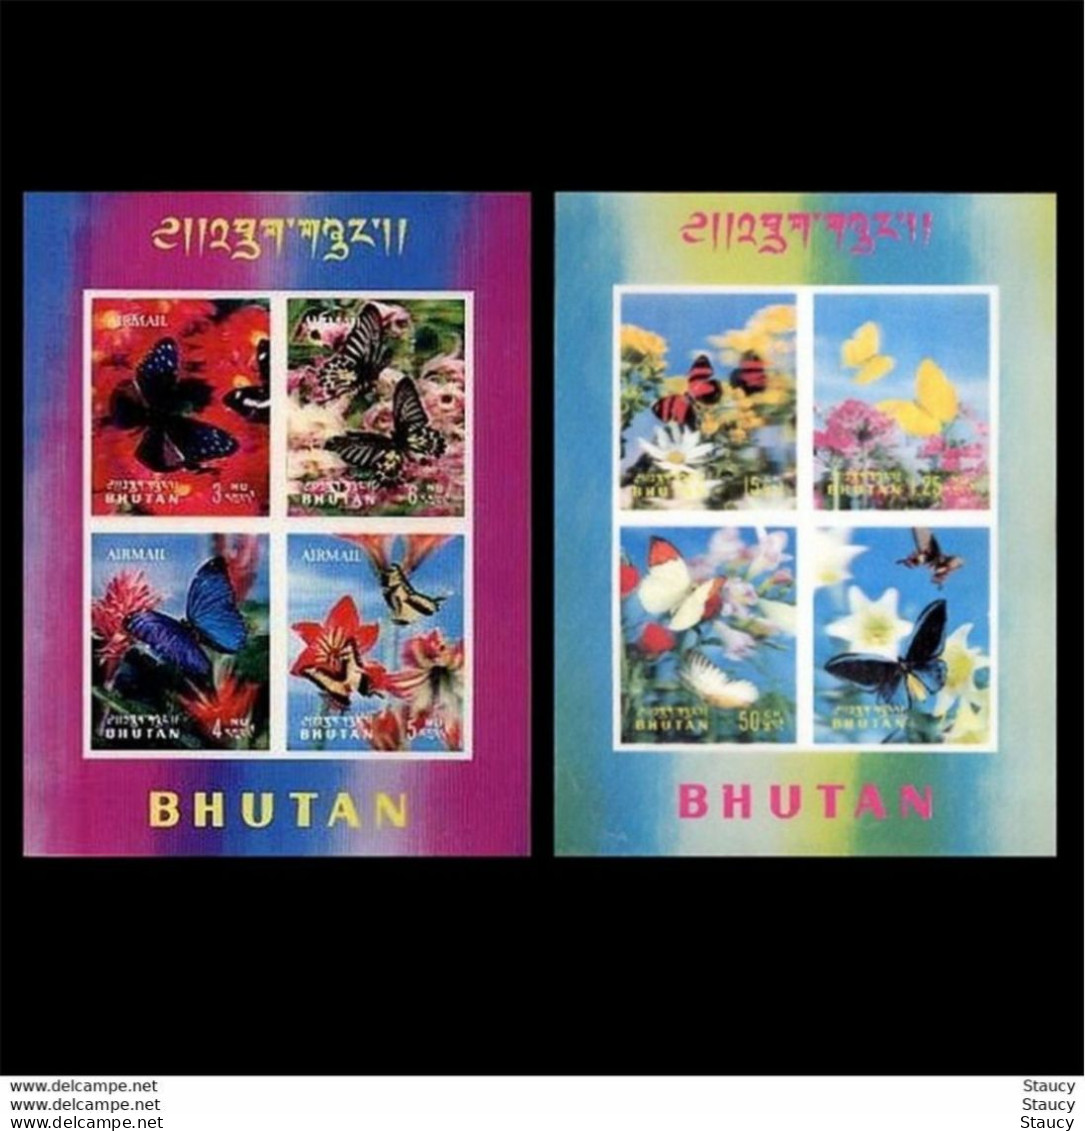 BHUTAN Bhutan 1968 Butterflies - 3d  Unique Stamp Imperf, Complete 8v Set + 2 Miniature Sheets MNH, As Per Scan - Fehldrucke